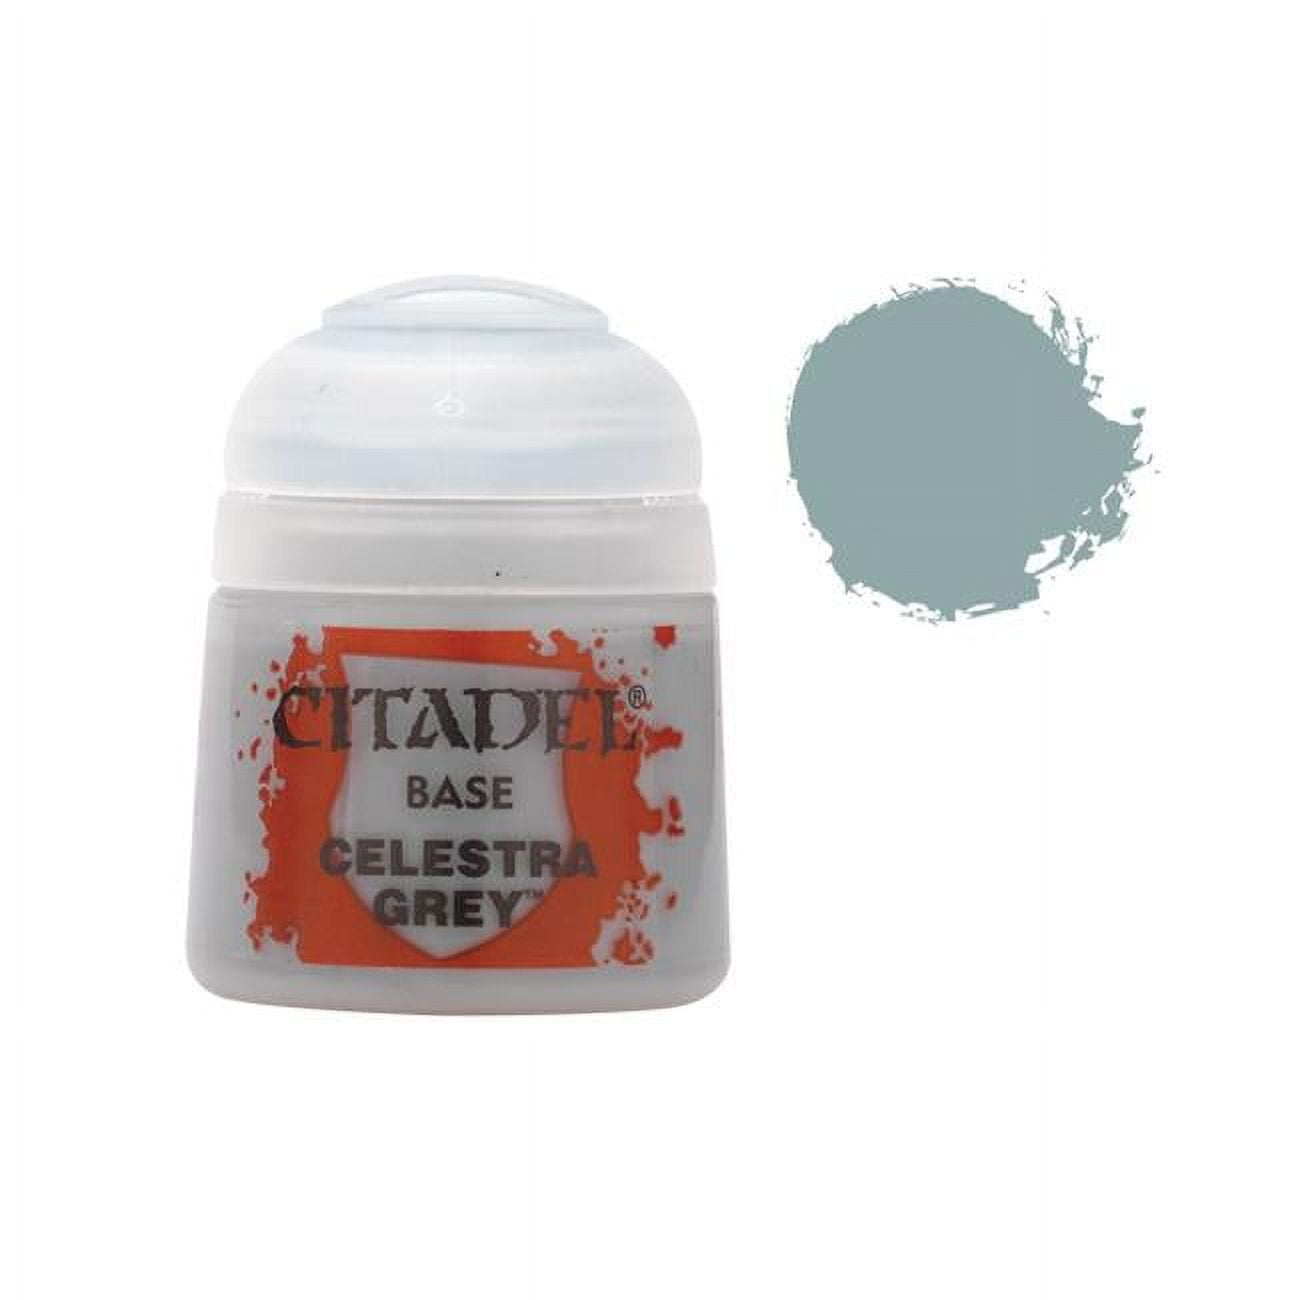 Kwik Stix Tempera Paint Sticks Global Skin Tone Set, Pack of 14